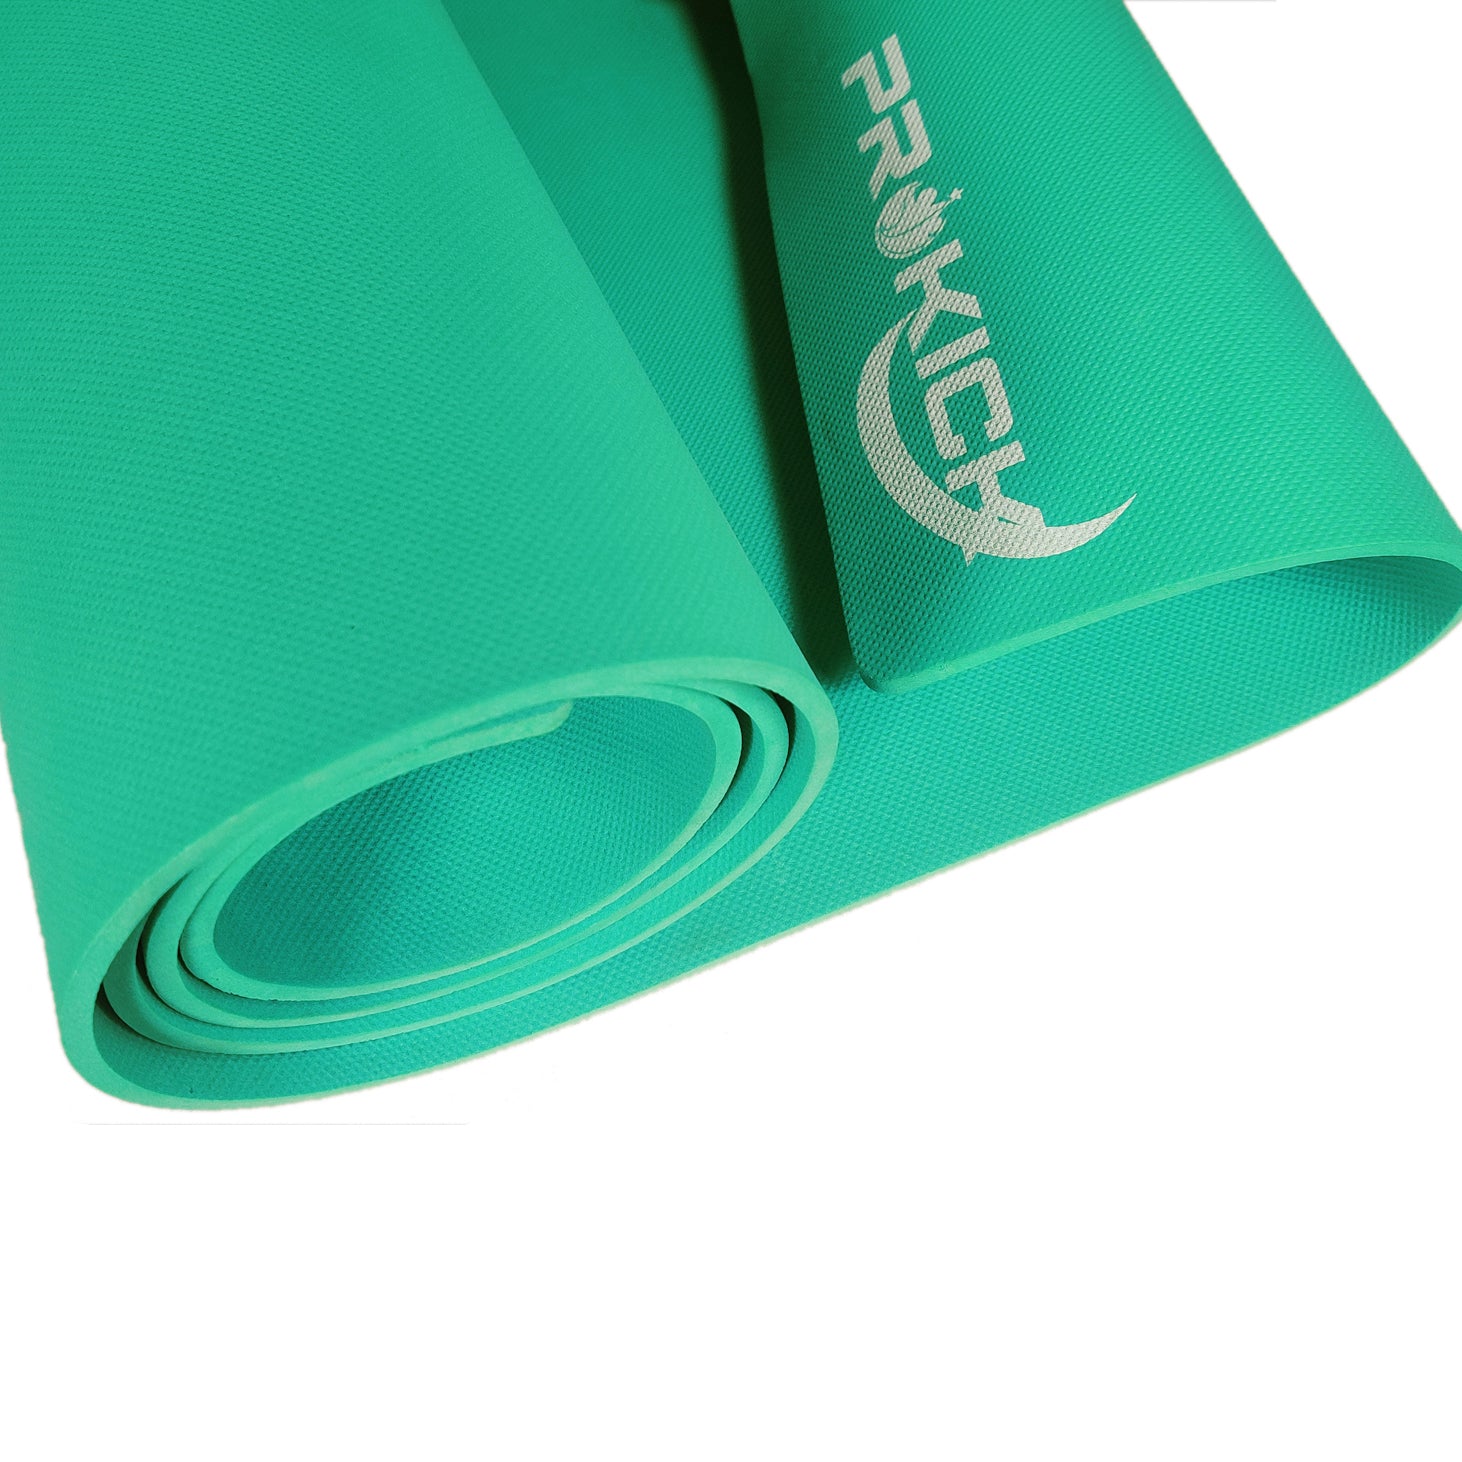 LiveEZ Anti-Skid, Lightweight with perfect grip EVA Yoga Mat for